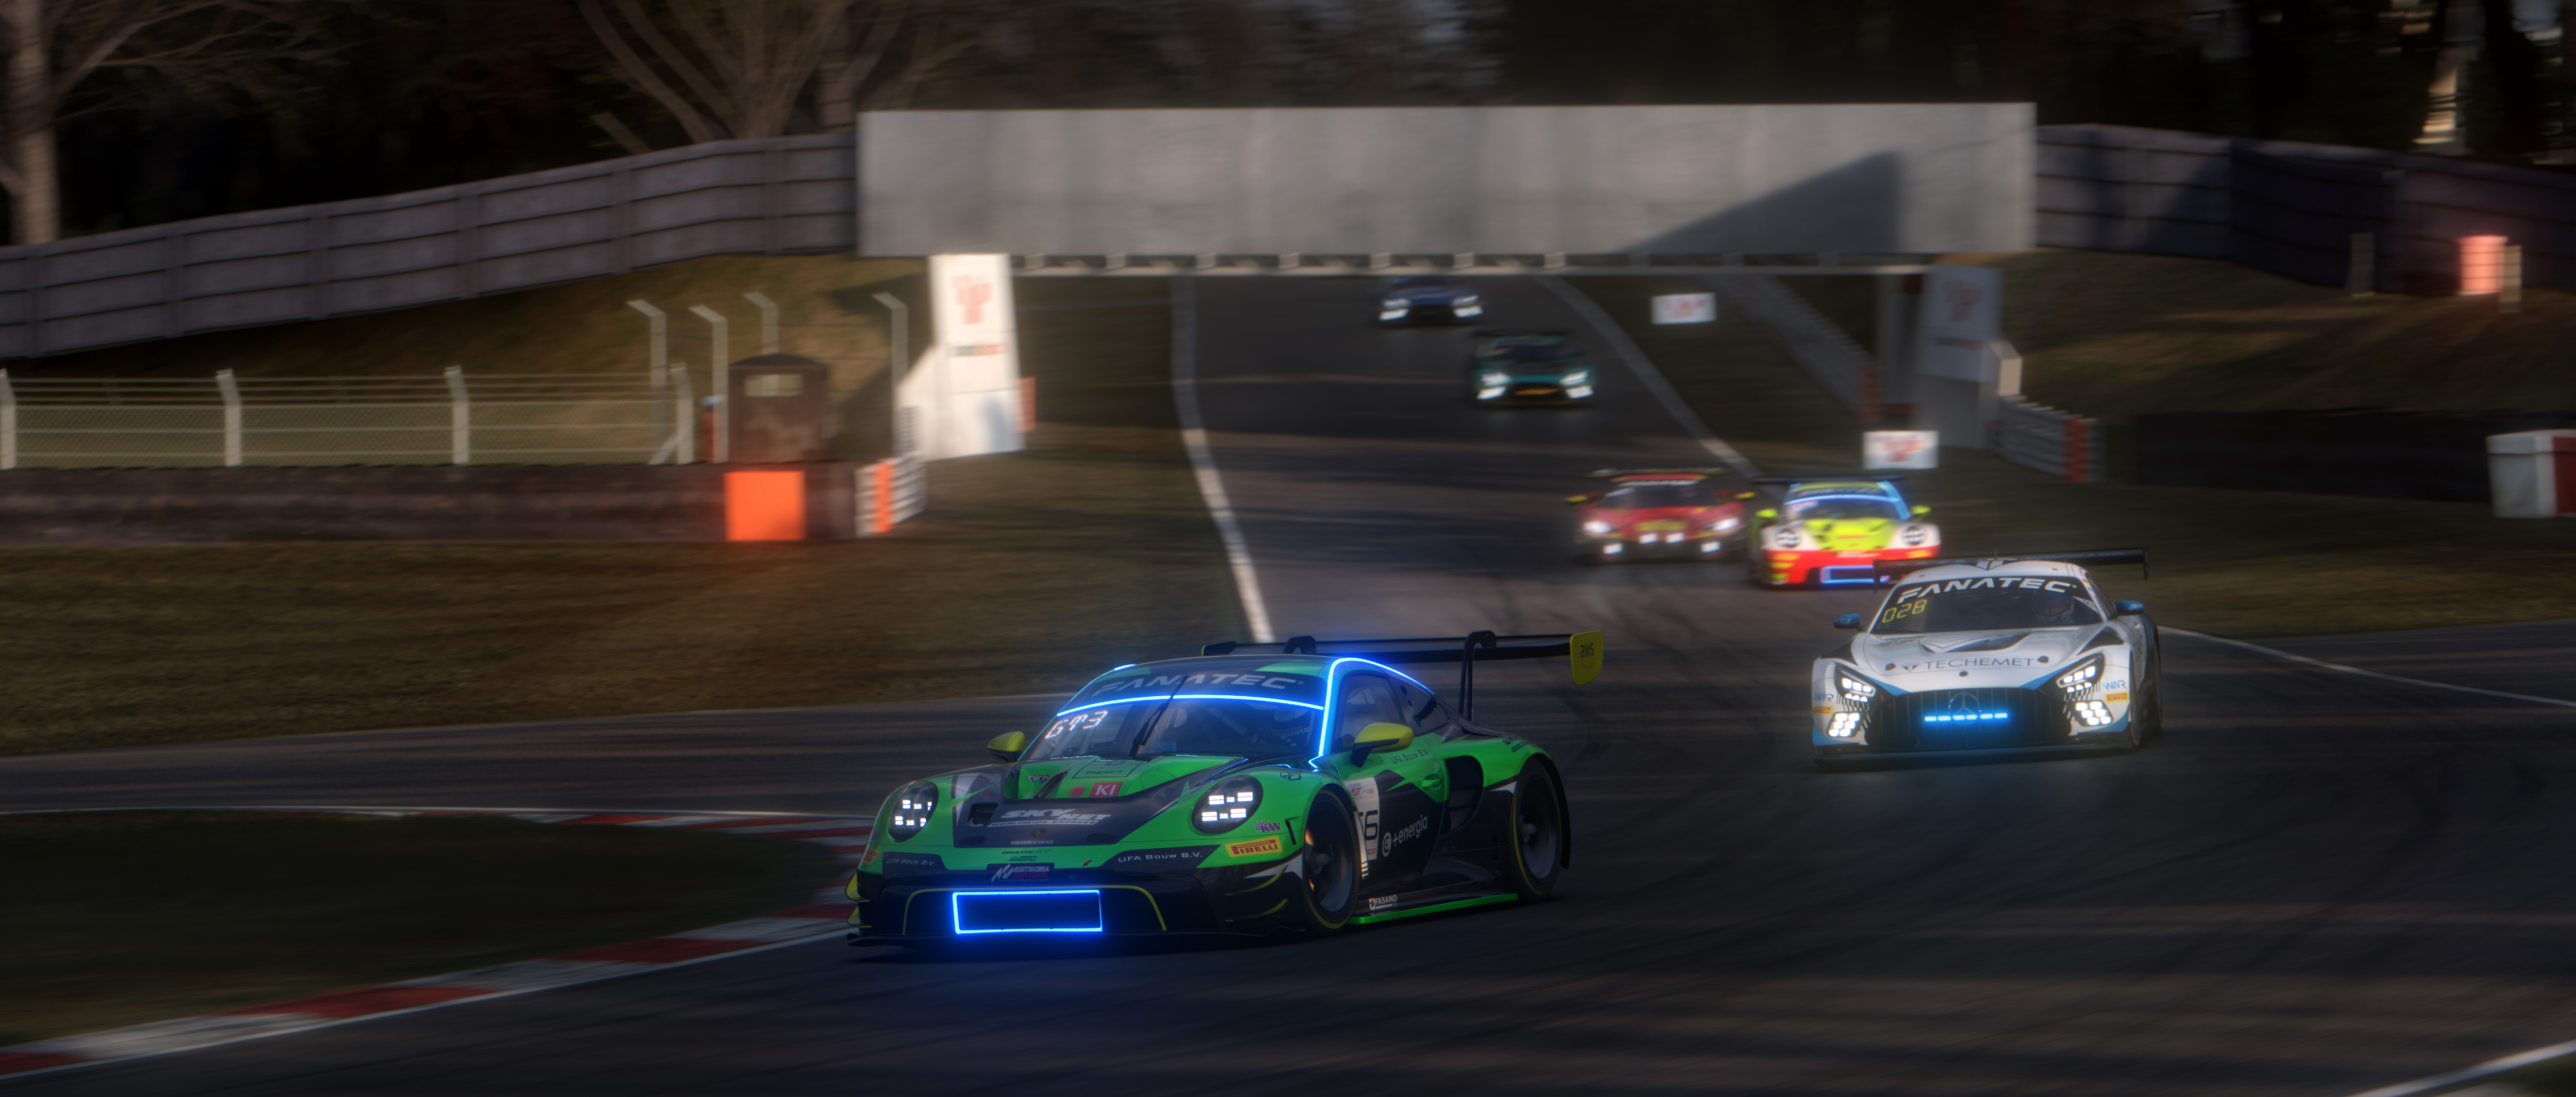 GT3 Racing Race Cars Car Assetto Corsa PC Gaming 5760x2452